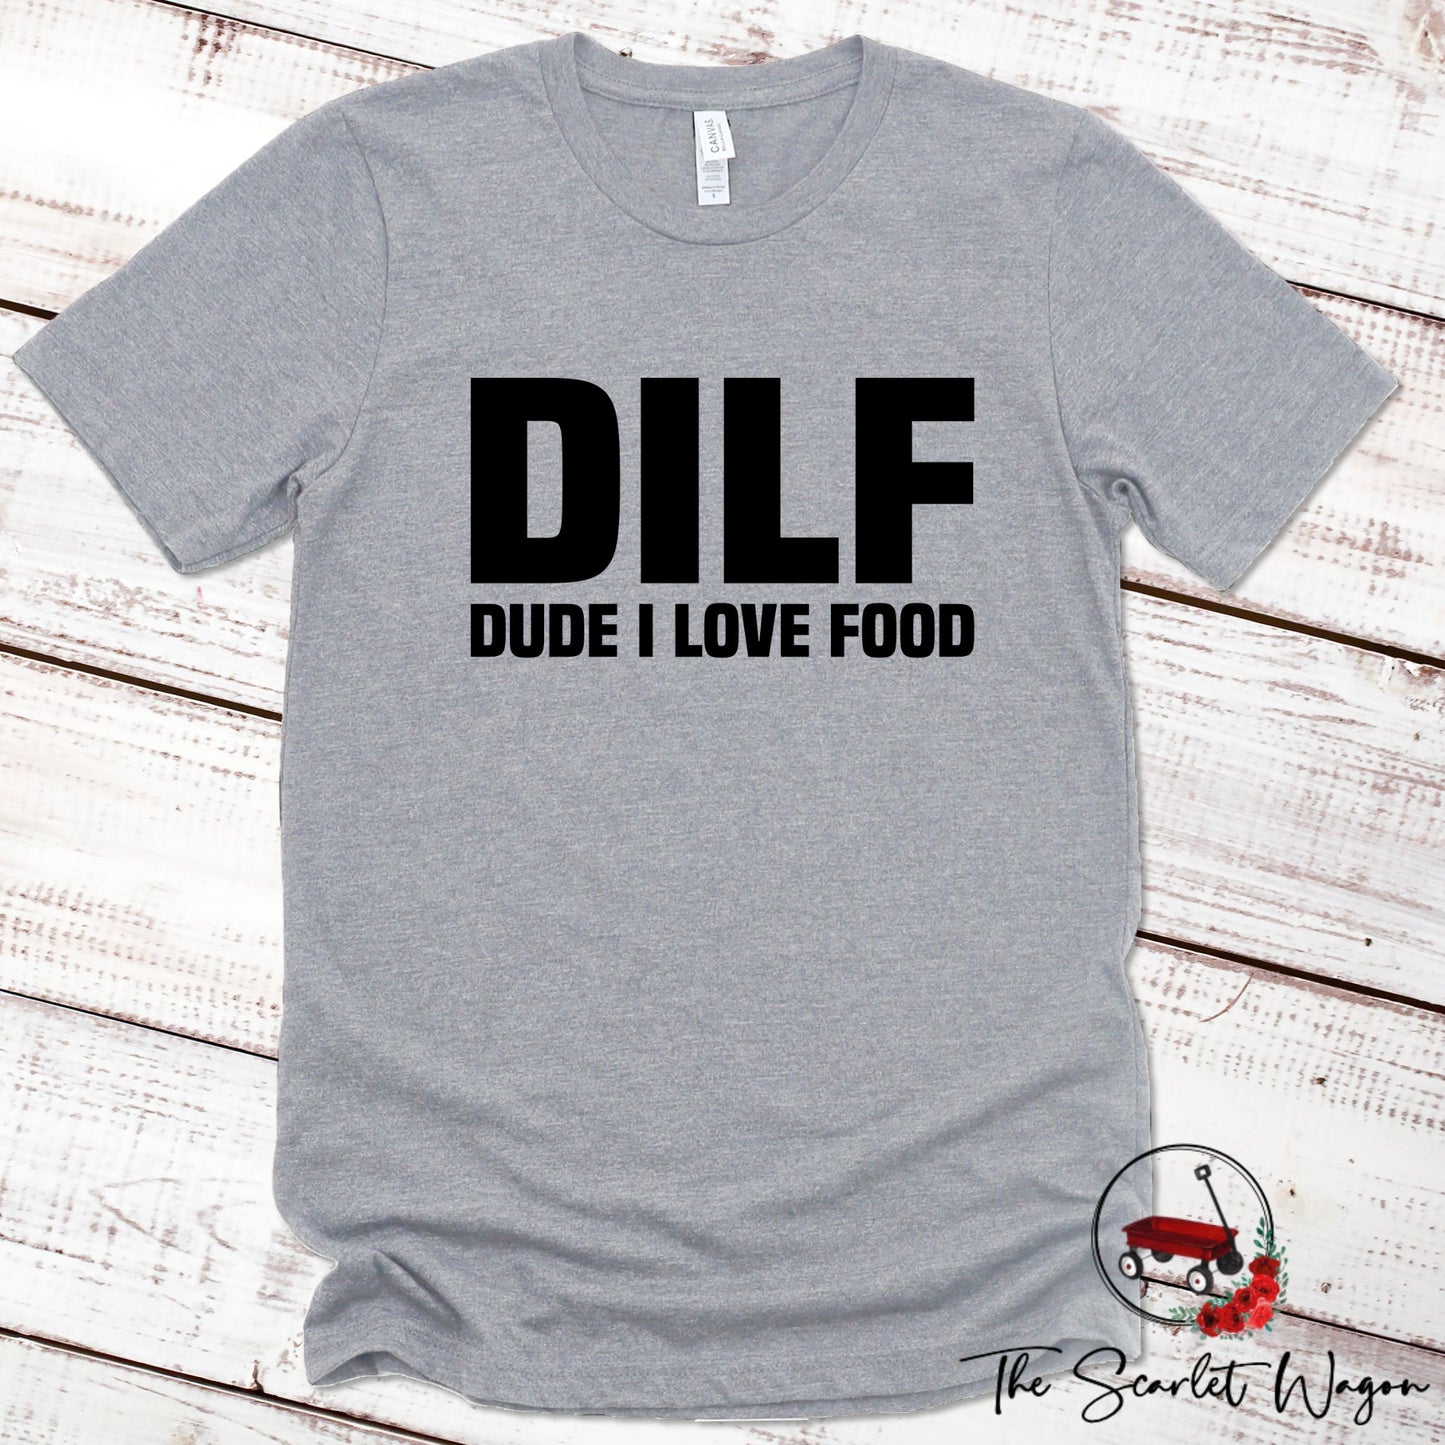 DILF - Dude I Love Food Premium Tee Scarlet Wagon Athletic Heather XS 